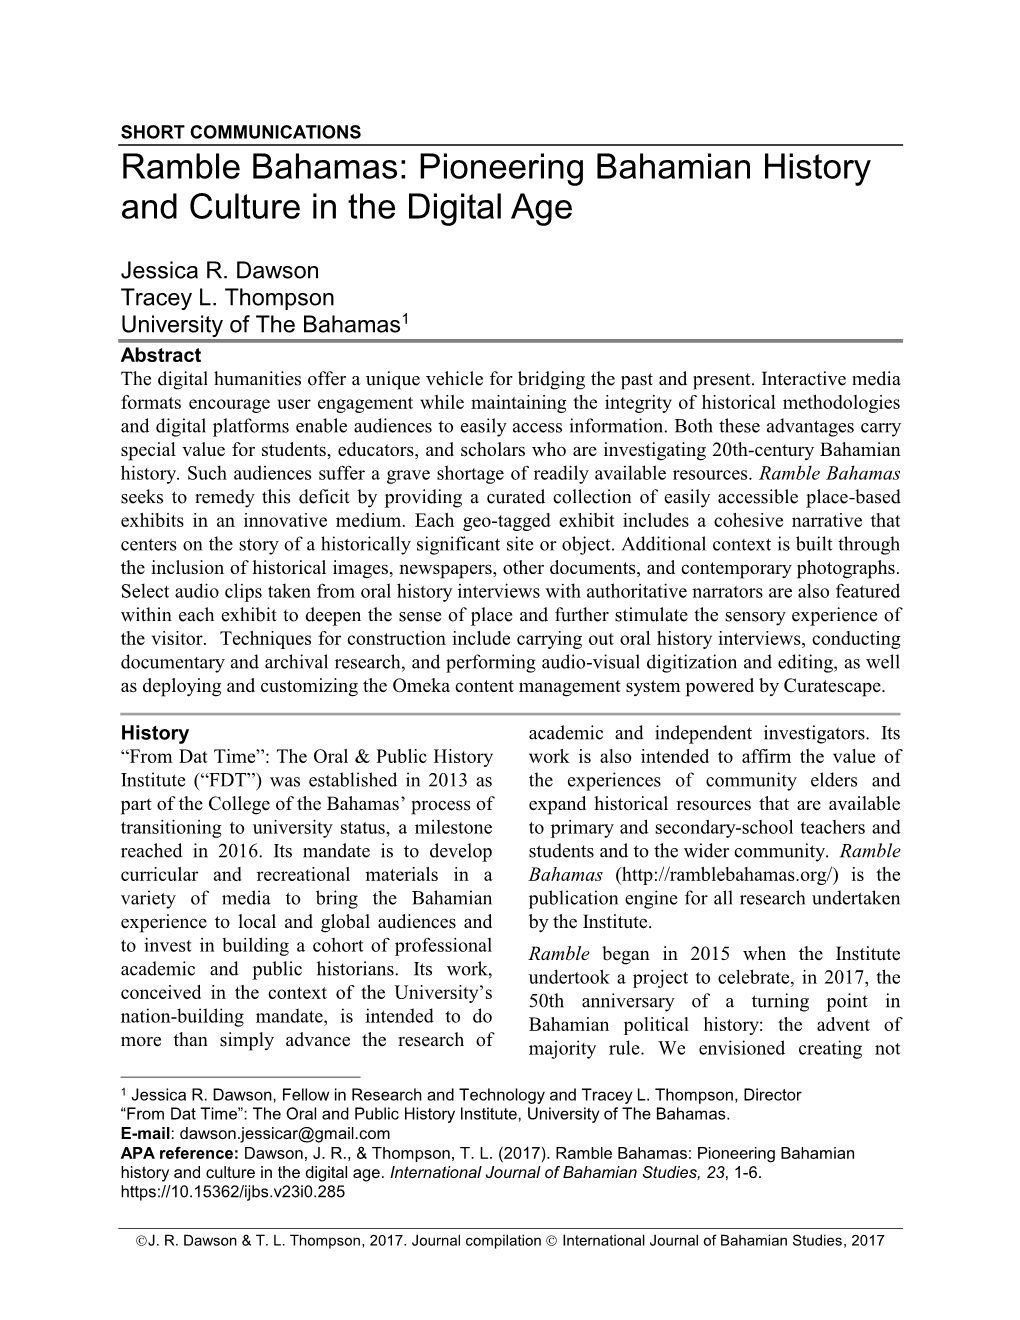 Ramble Bahamas: Pioneering Bahamian History and Culture in the Digital Age